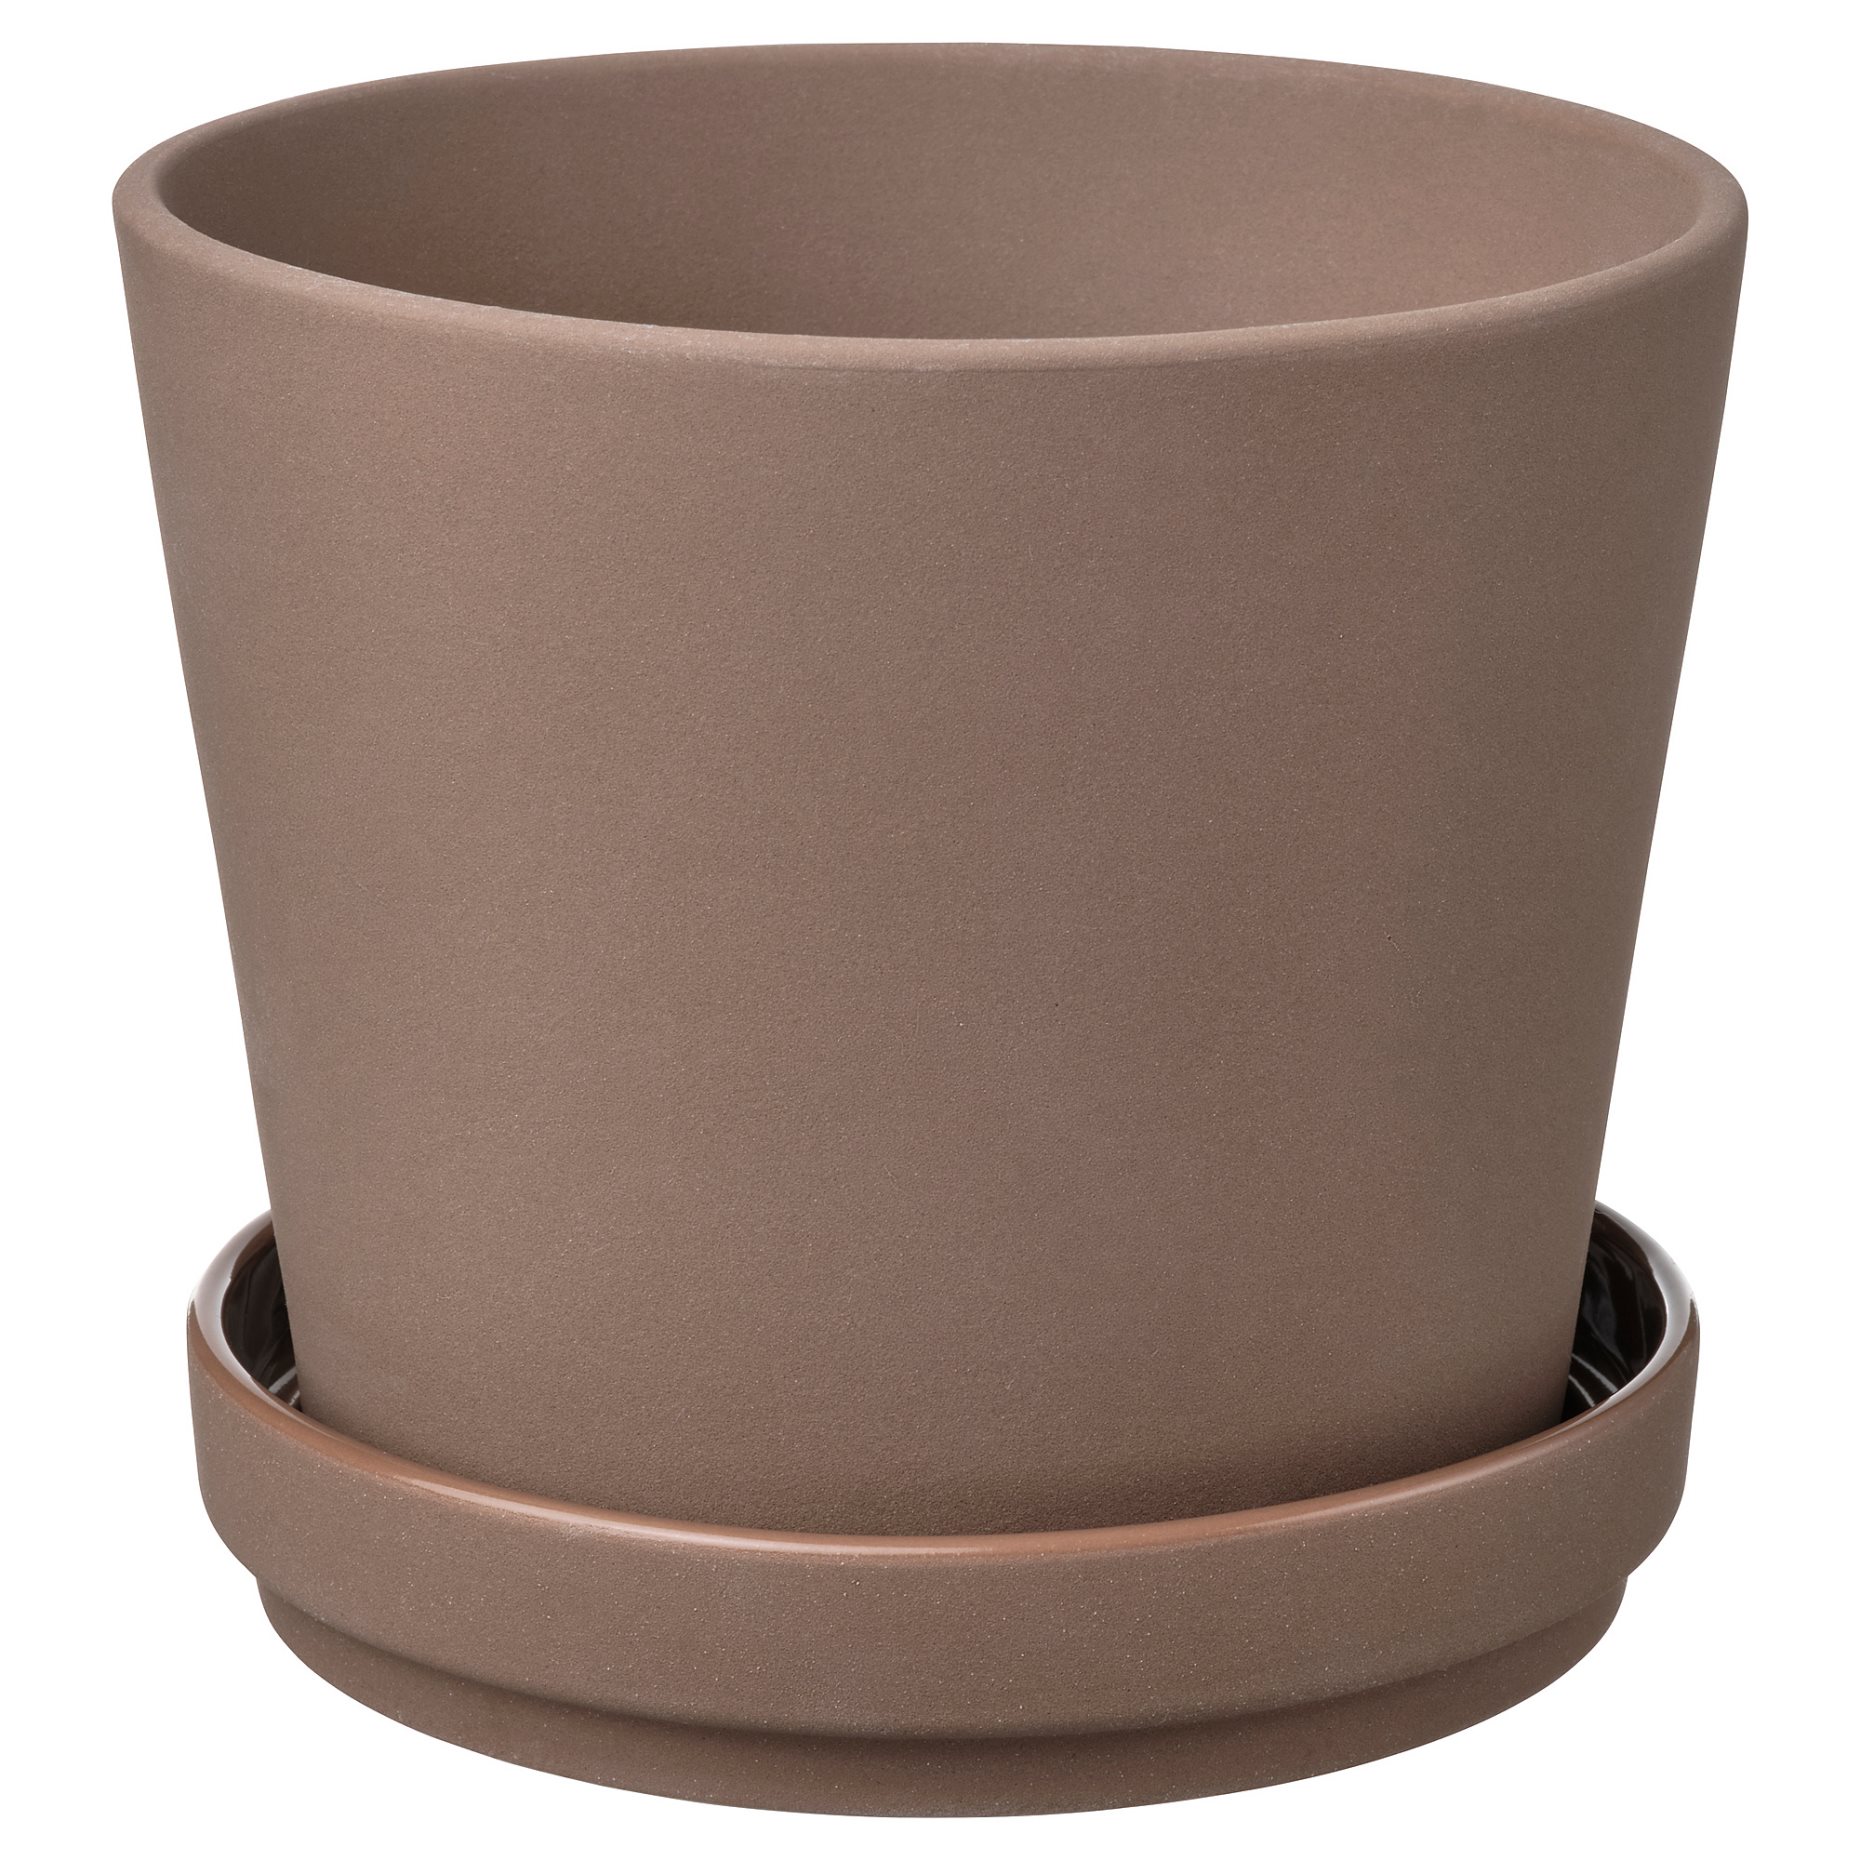 KLARBÄR, plant pot with saucer/in/outdoor, 12 cm, 405.084.26